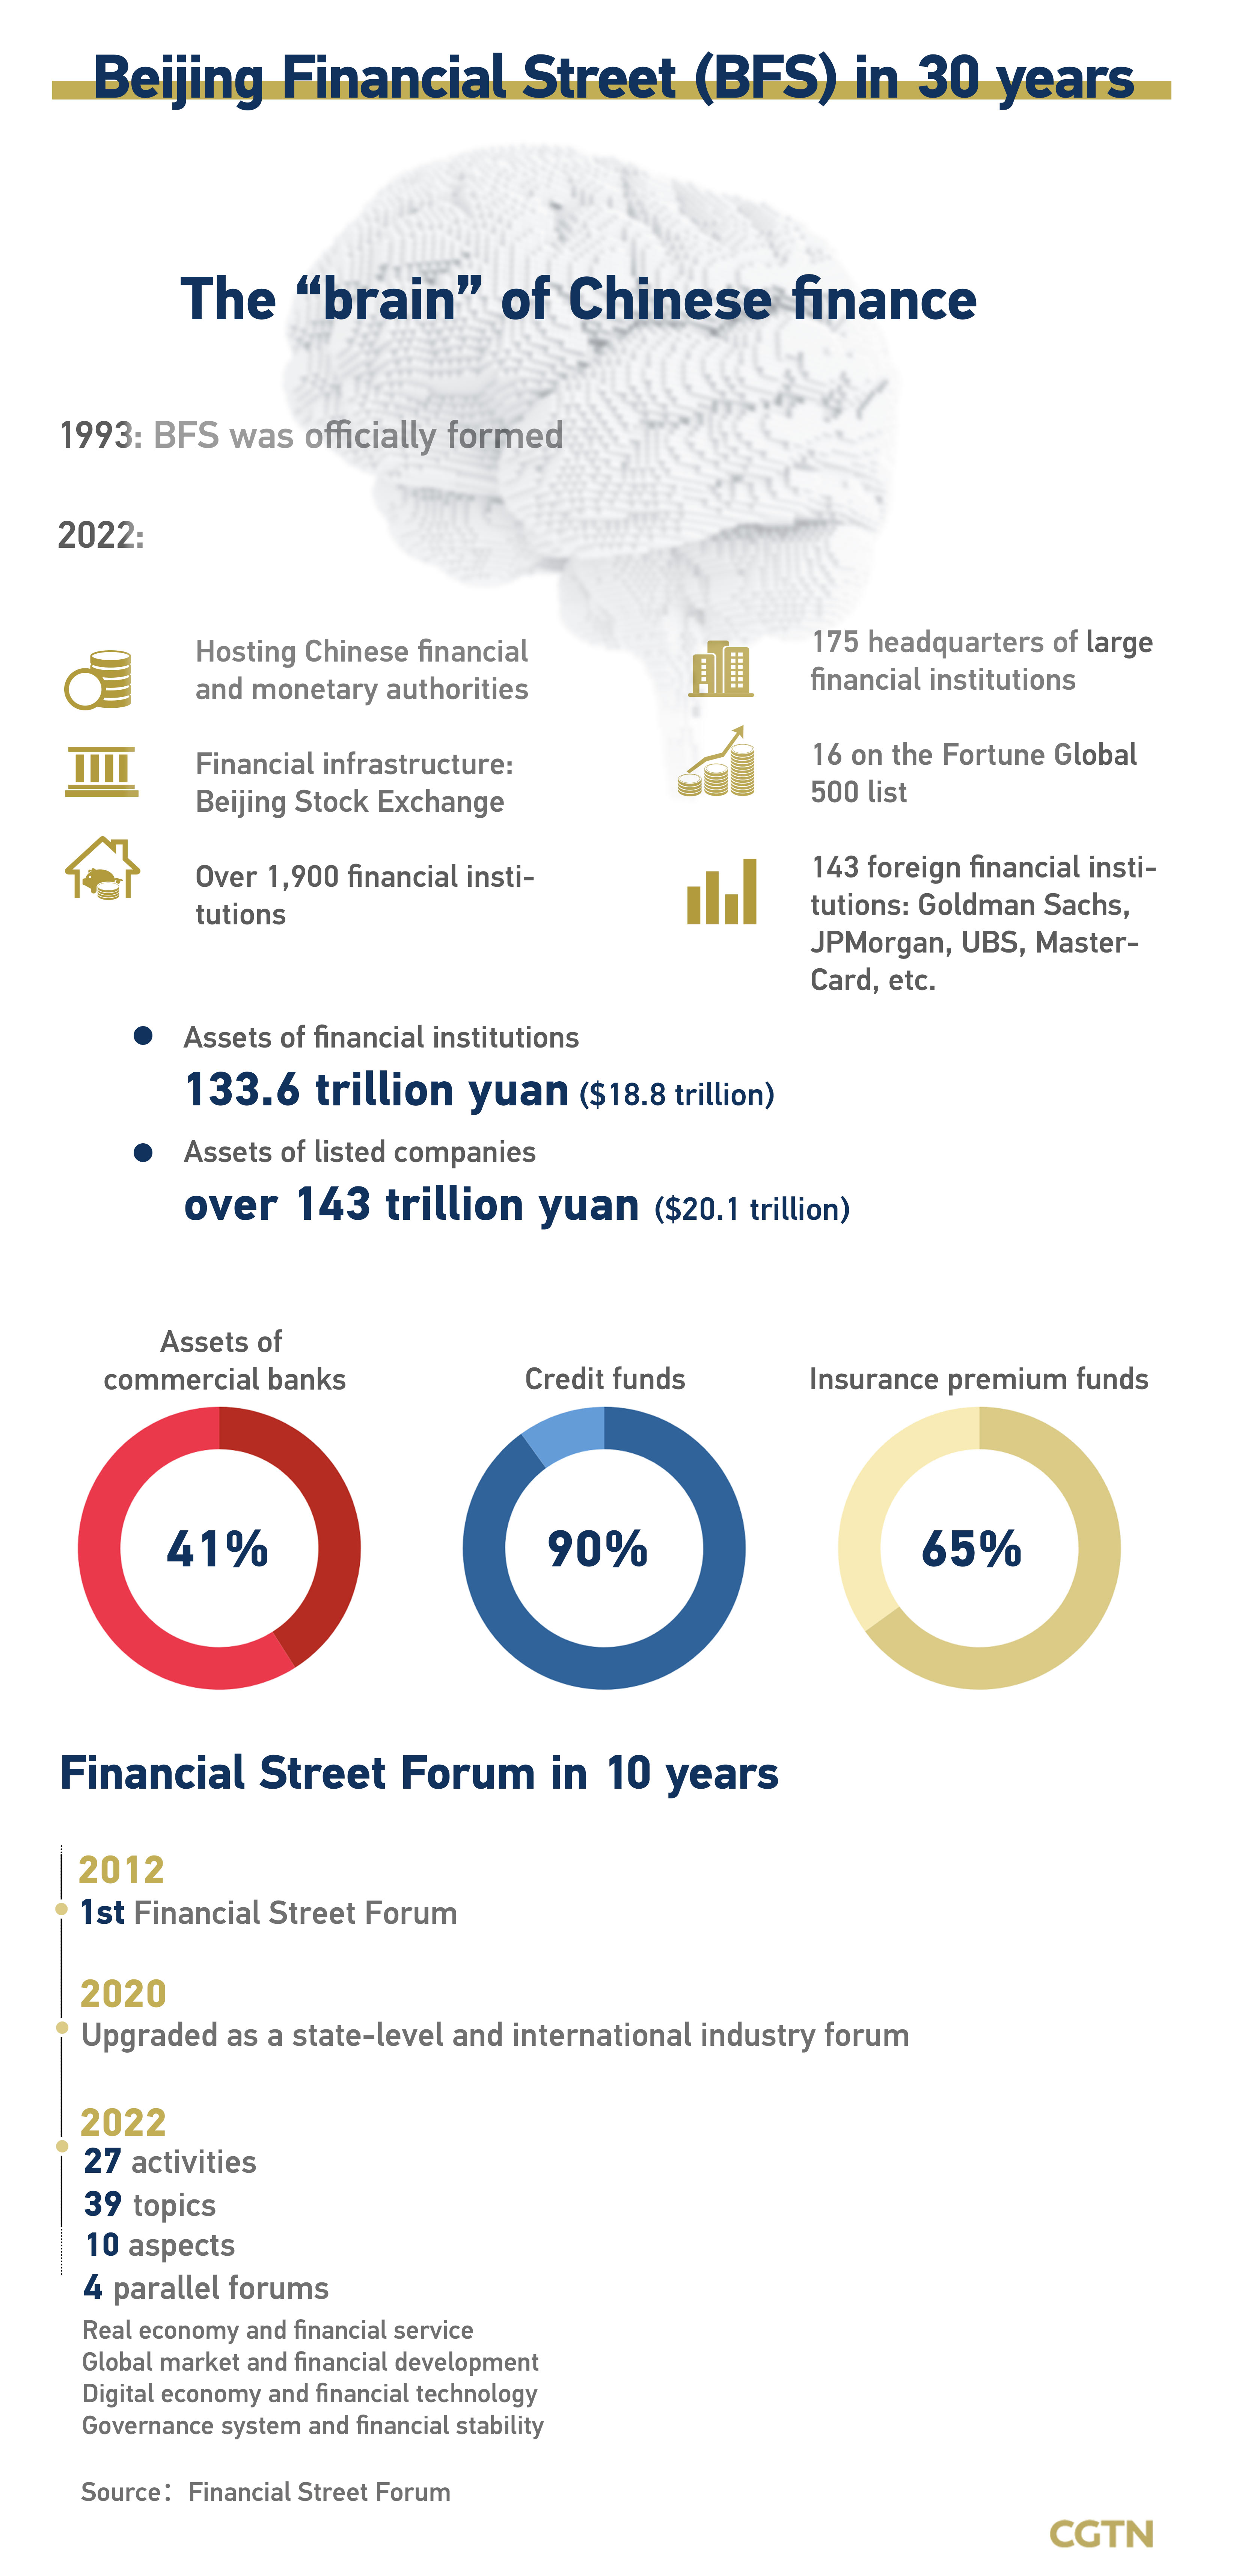 Financial Street Forum 2022 to open in Beijing on Monday